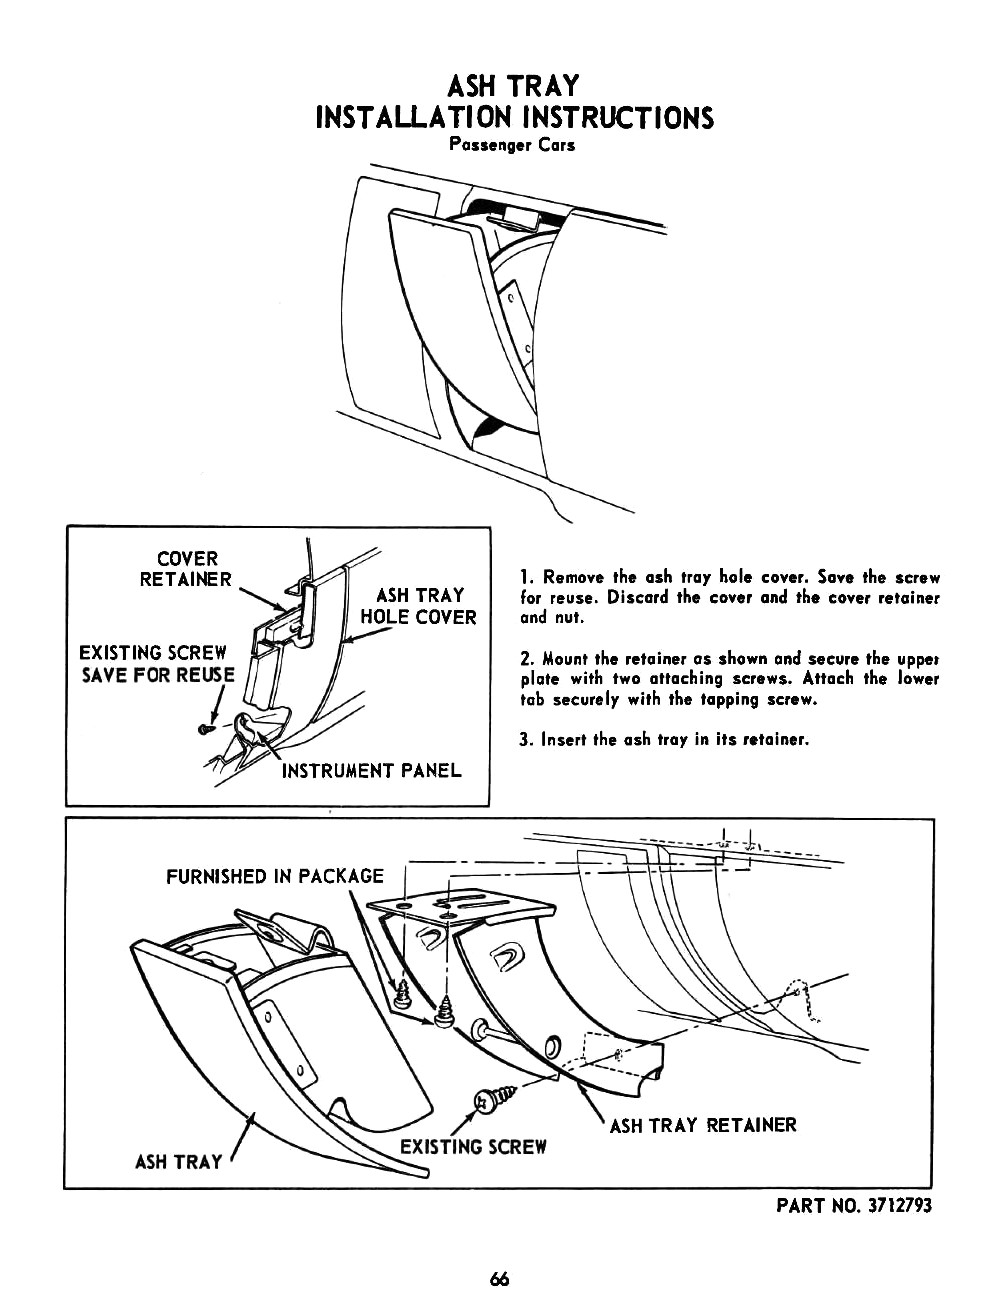 1955_Chevrolet_Acc_Manual-66